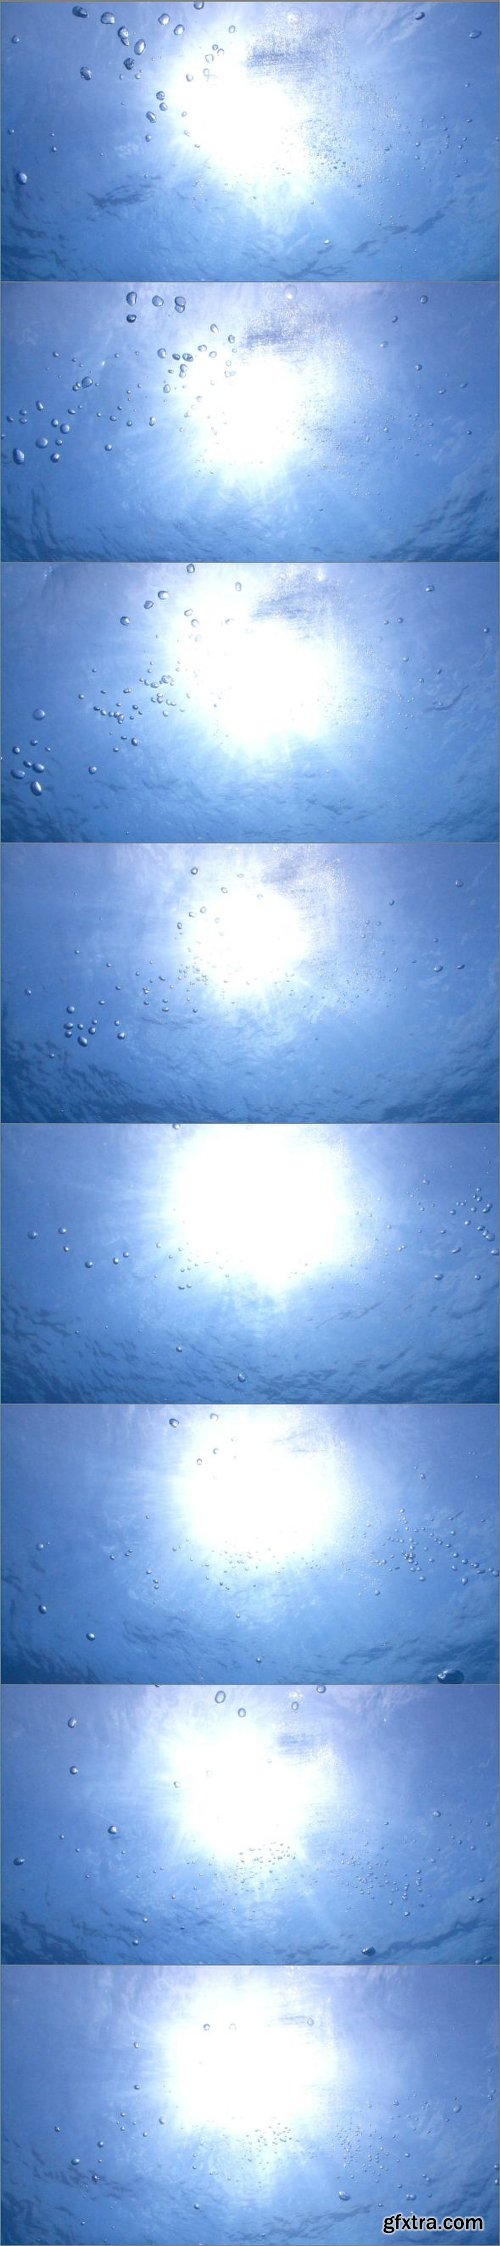 Air Bubbles Underwater